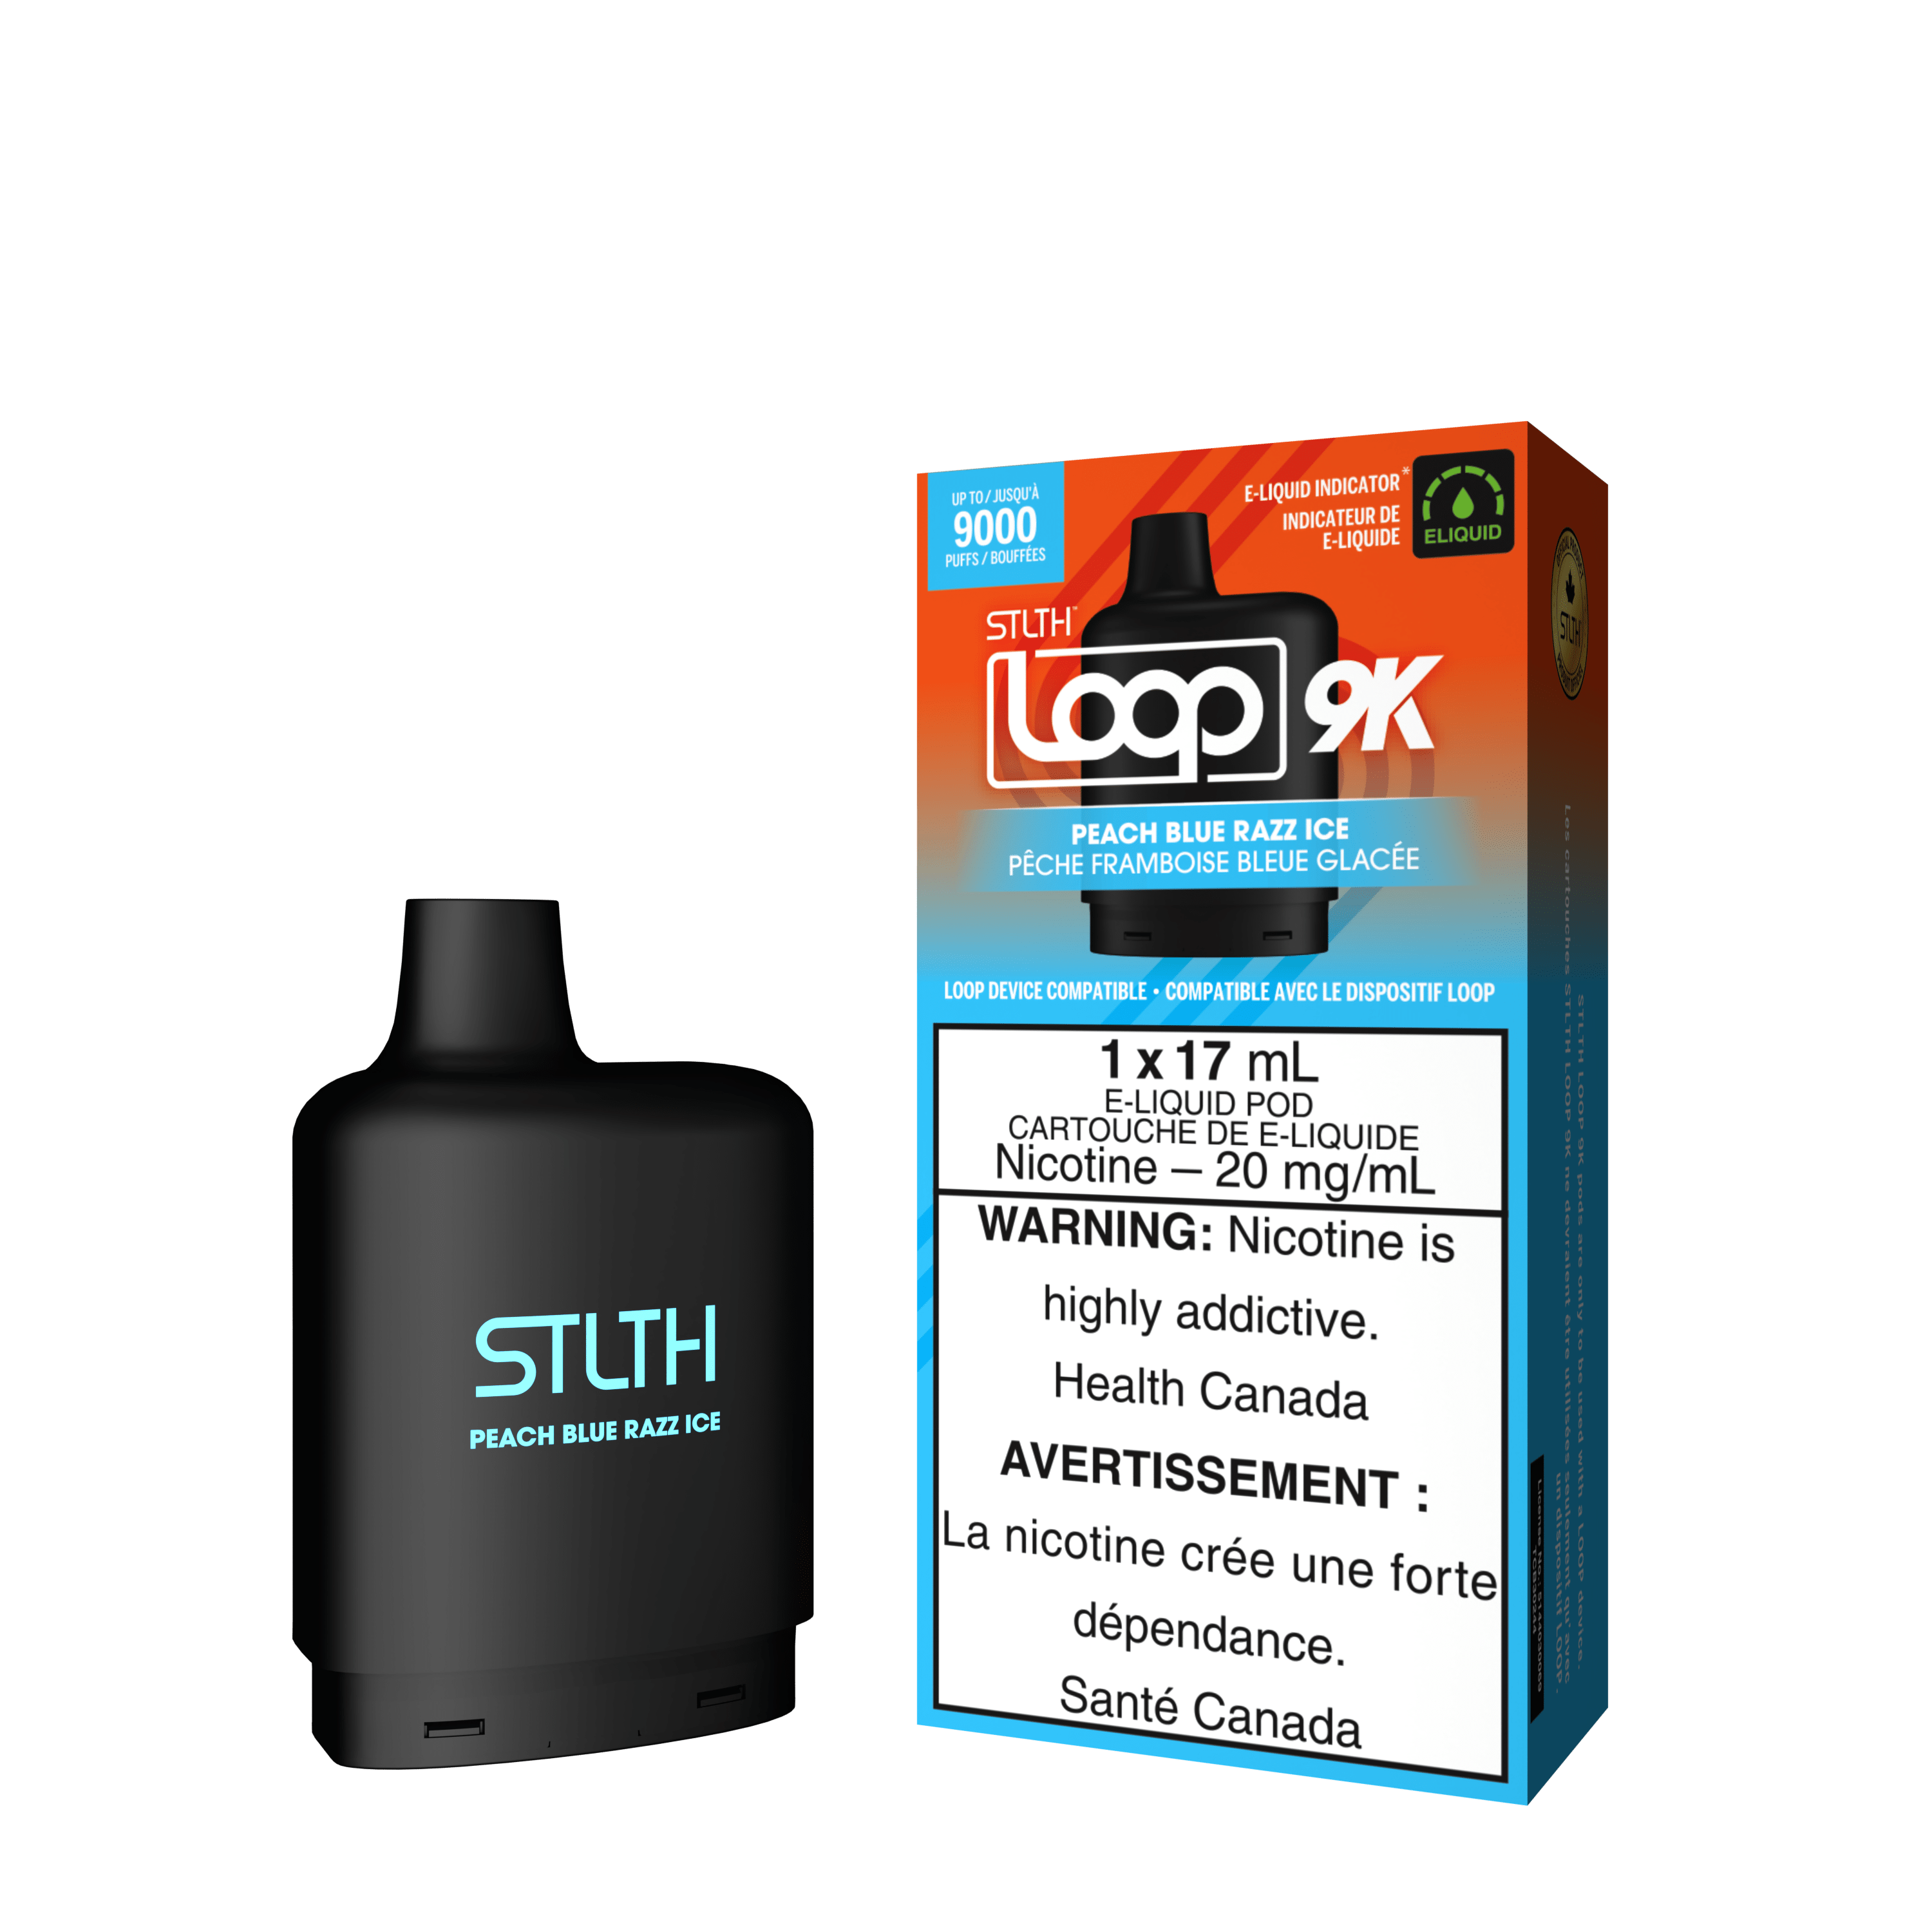 STLTH Loop 9K Pod - Peach Blue Razz Ice available on Canada online vape shop